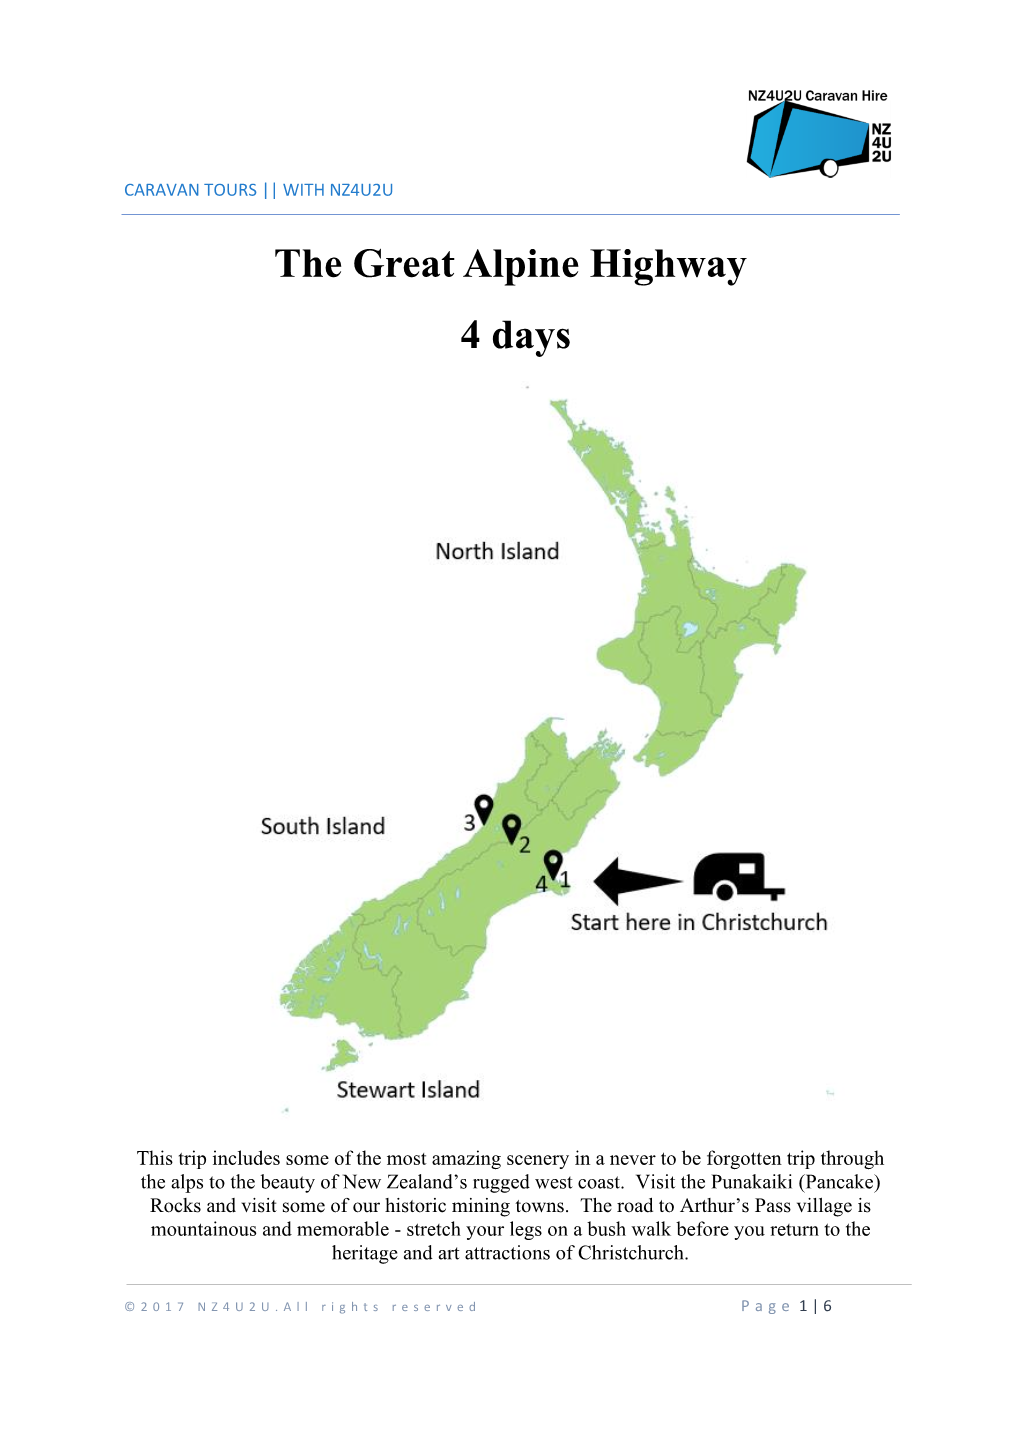 The Great Alpine Highway 4 Days